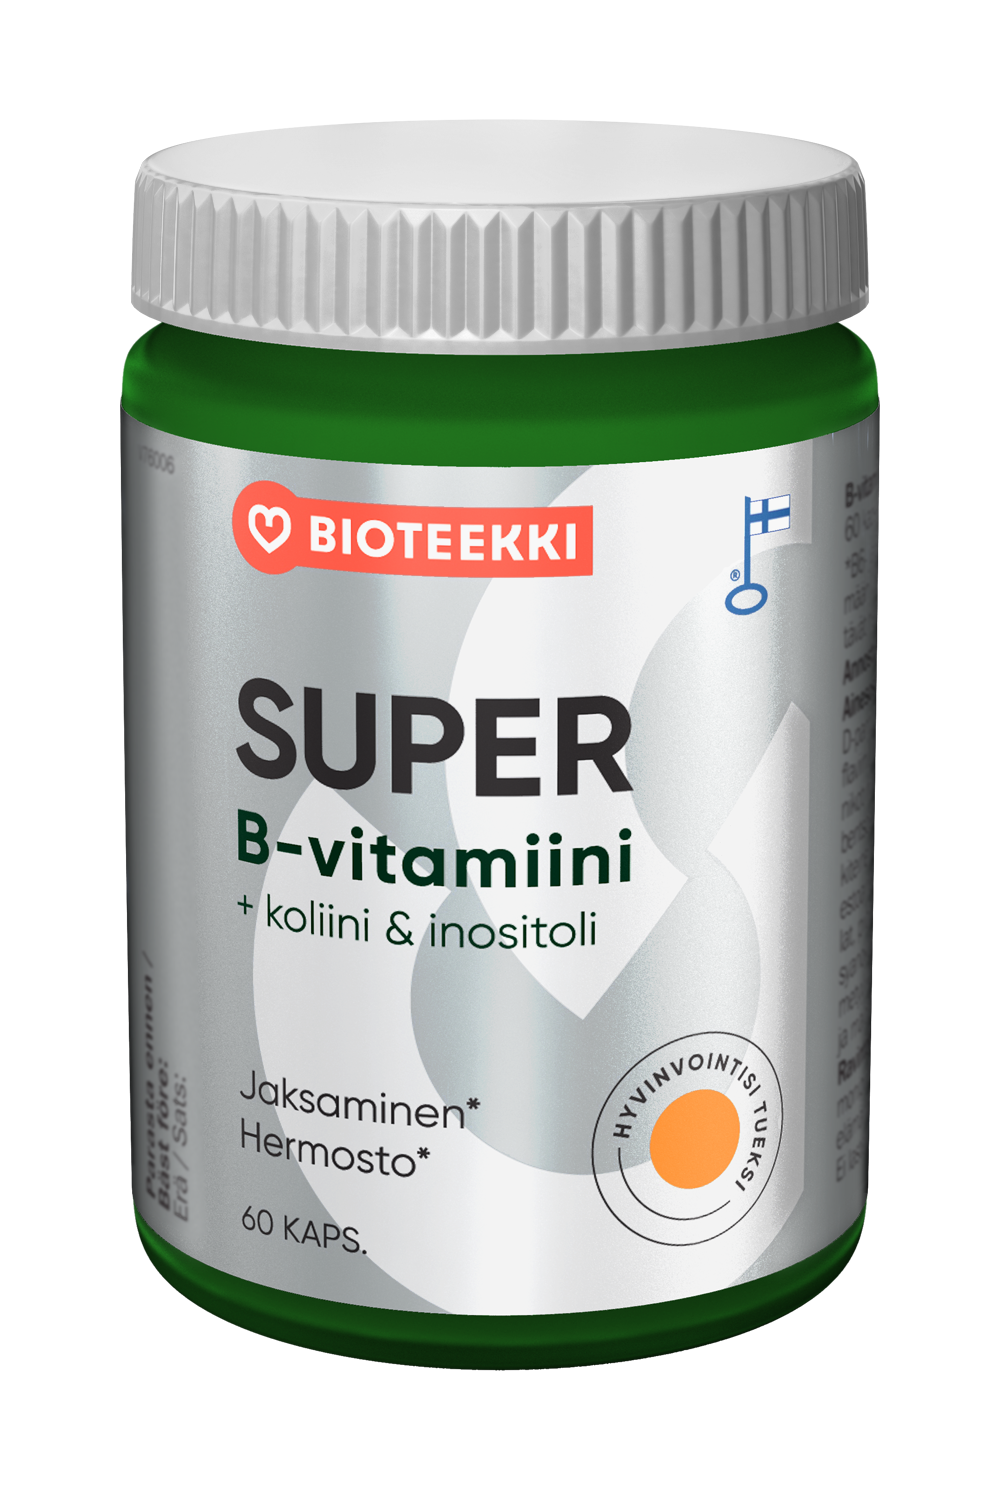 Super B-vitamiini